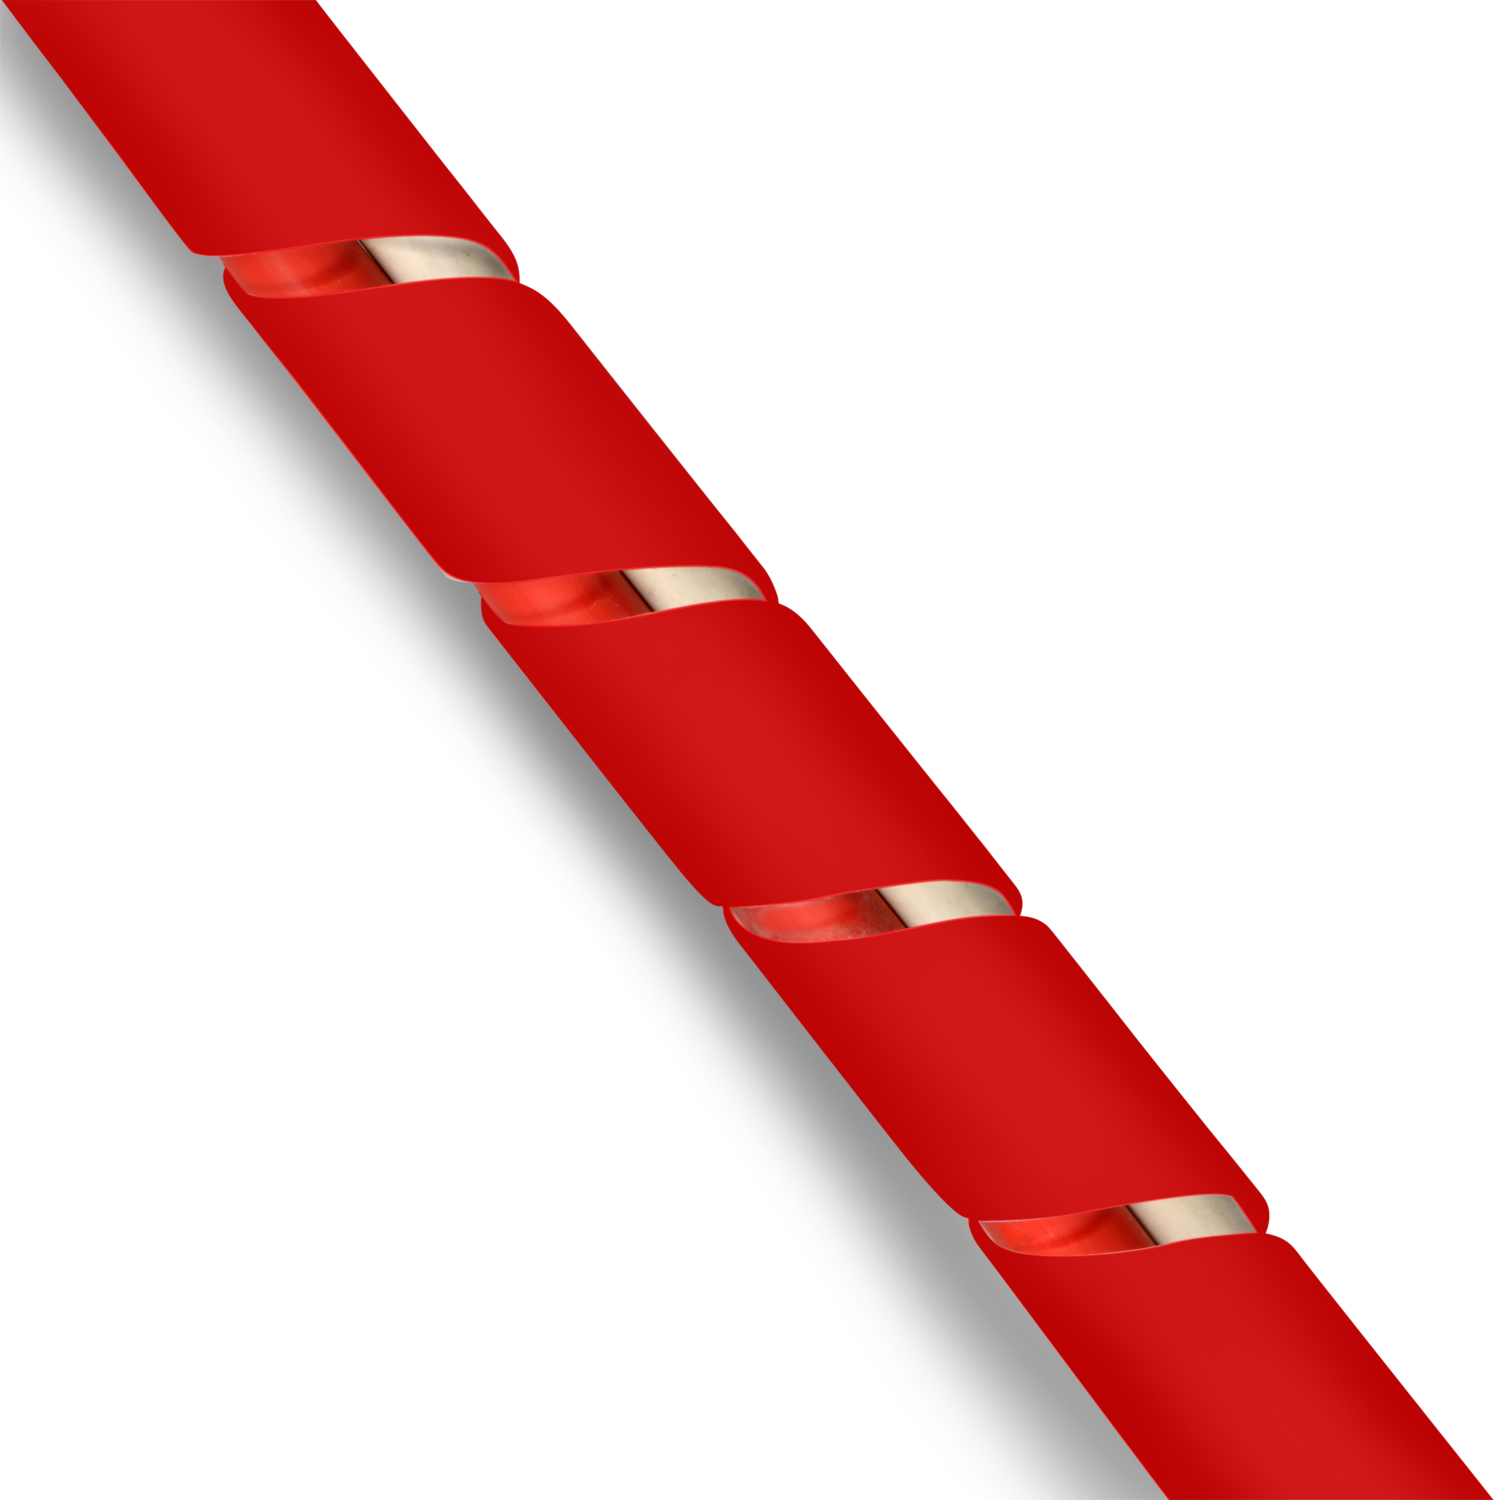 TPFNET 3er Pack Premium Spiral-Kabelschlauch 4-50mm, Rot Rot, Kabelschlauch, 10m